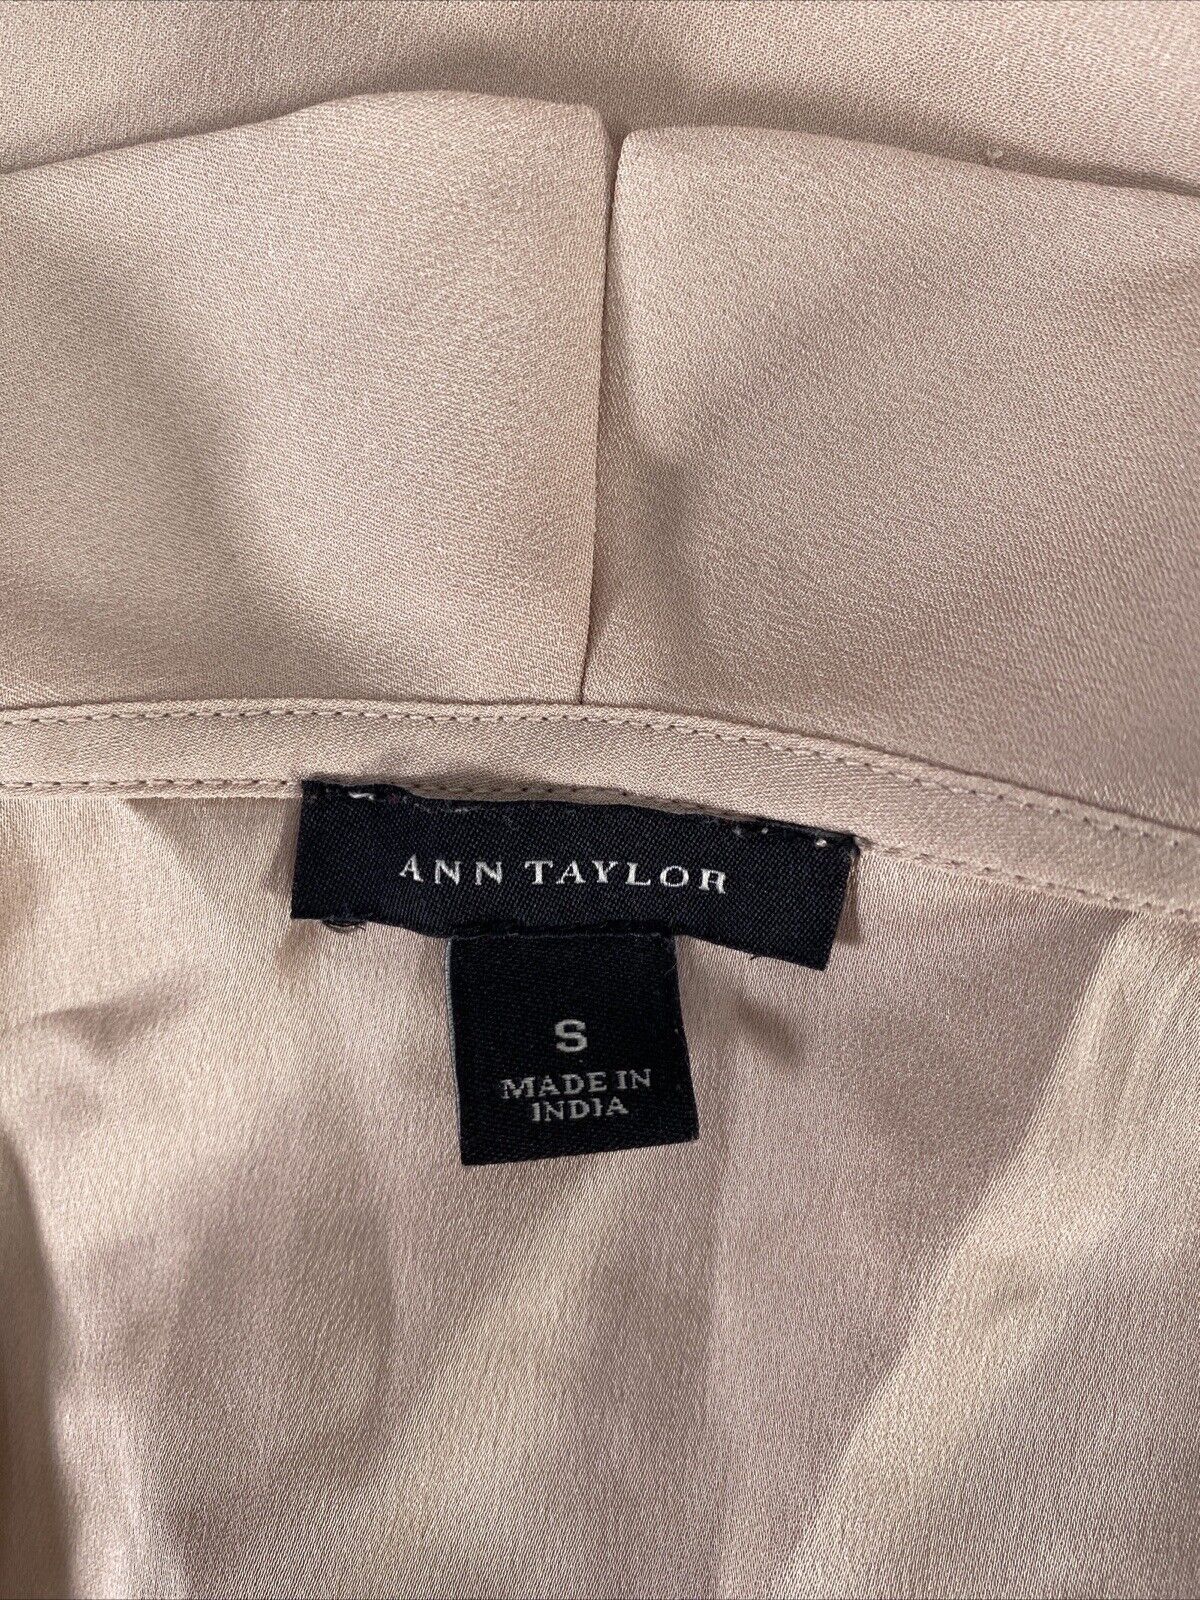 Ann Taylor Women's Beige Sheer Cap Sleeve Blouse Top -S